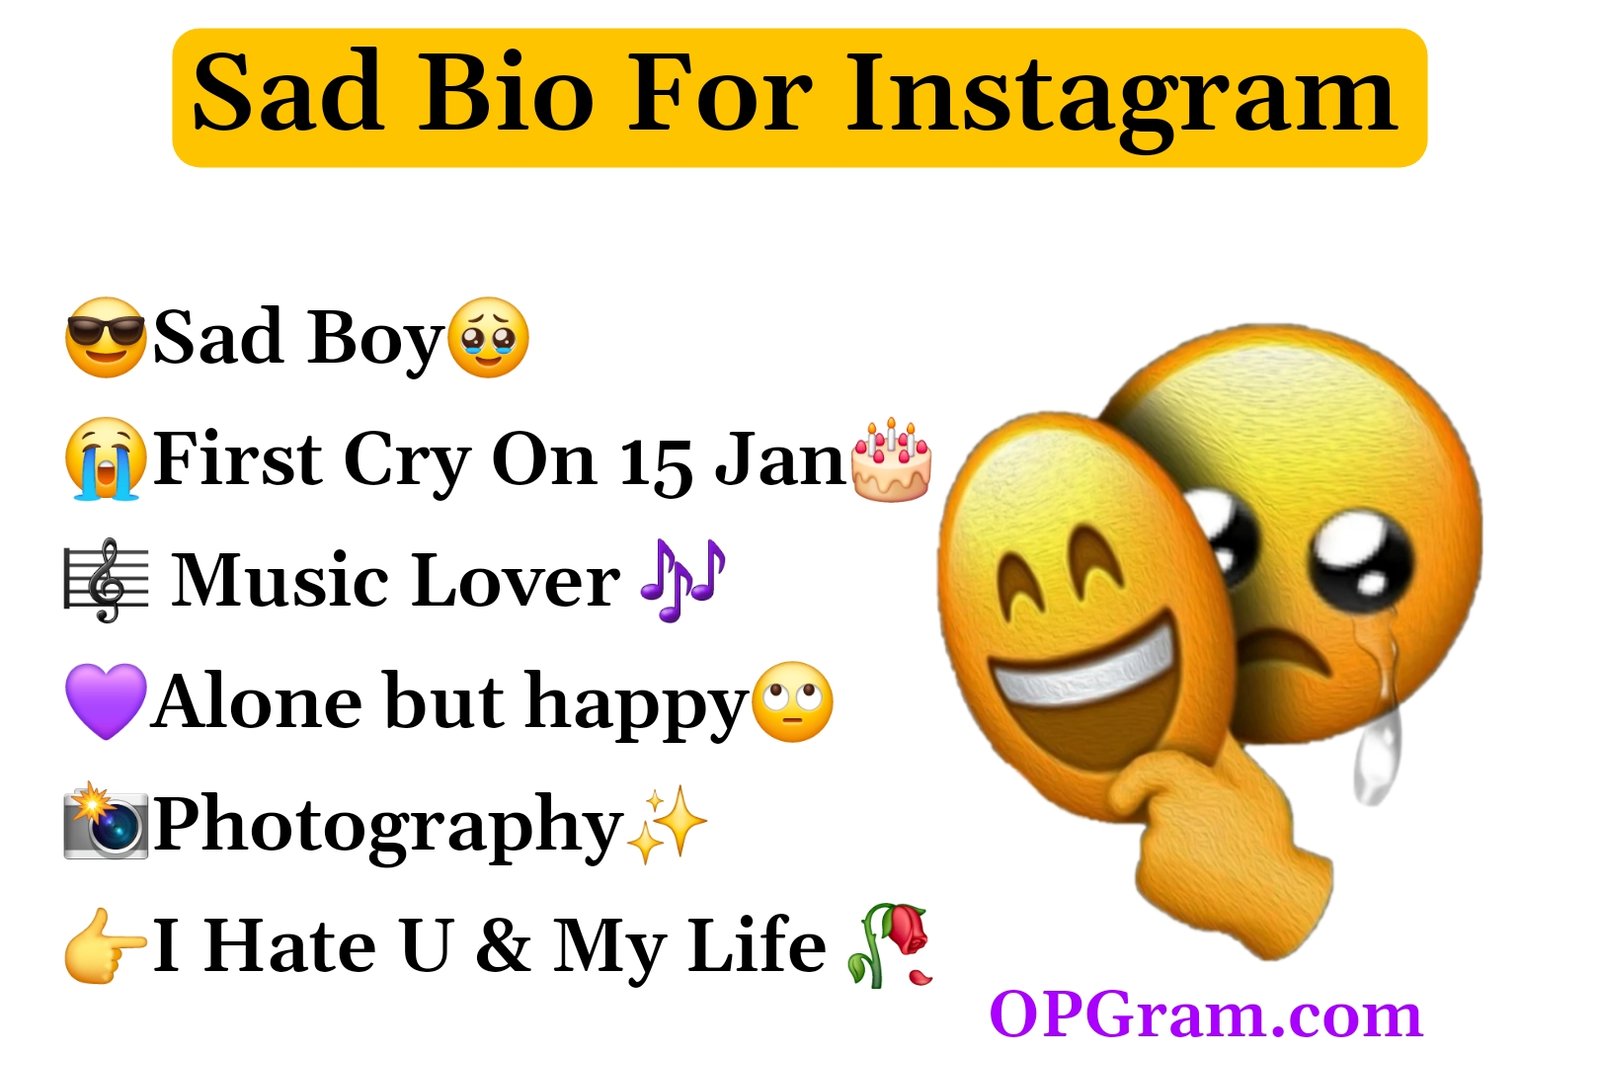 Sad Bio For Instagram 
